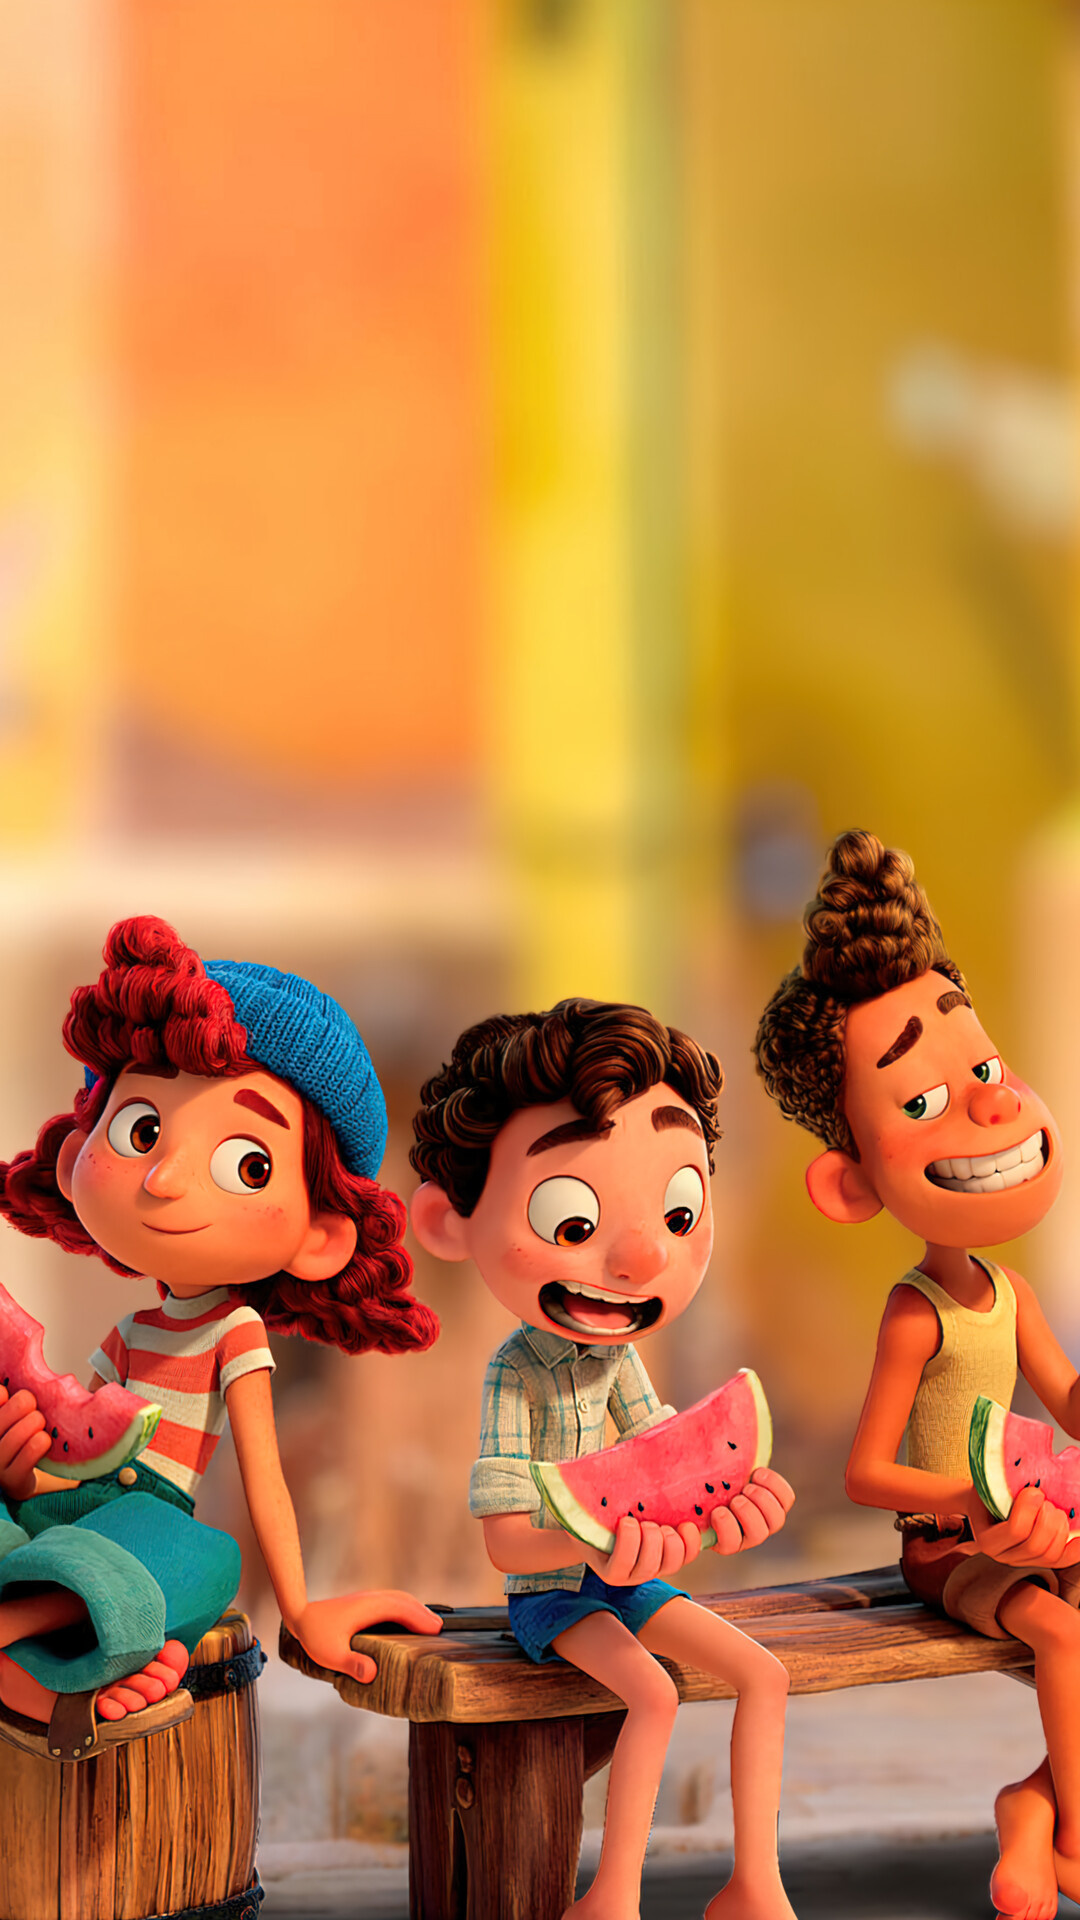 Luca Pixar wallpapers, Colorful animated film, Italian Riviera paradise, Heartwarming friendship, 1080x1920 Full HD Handy